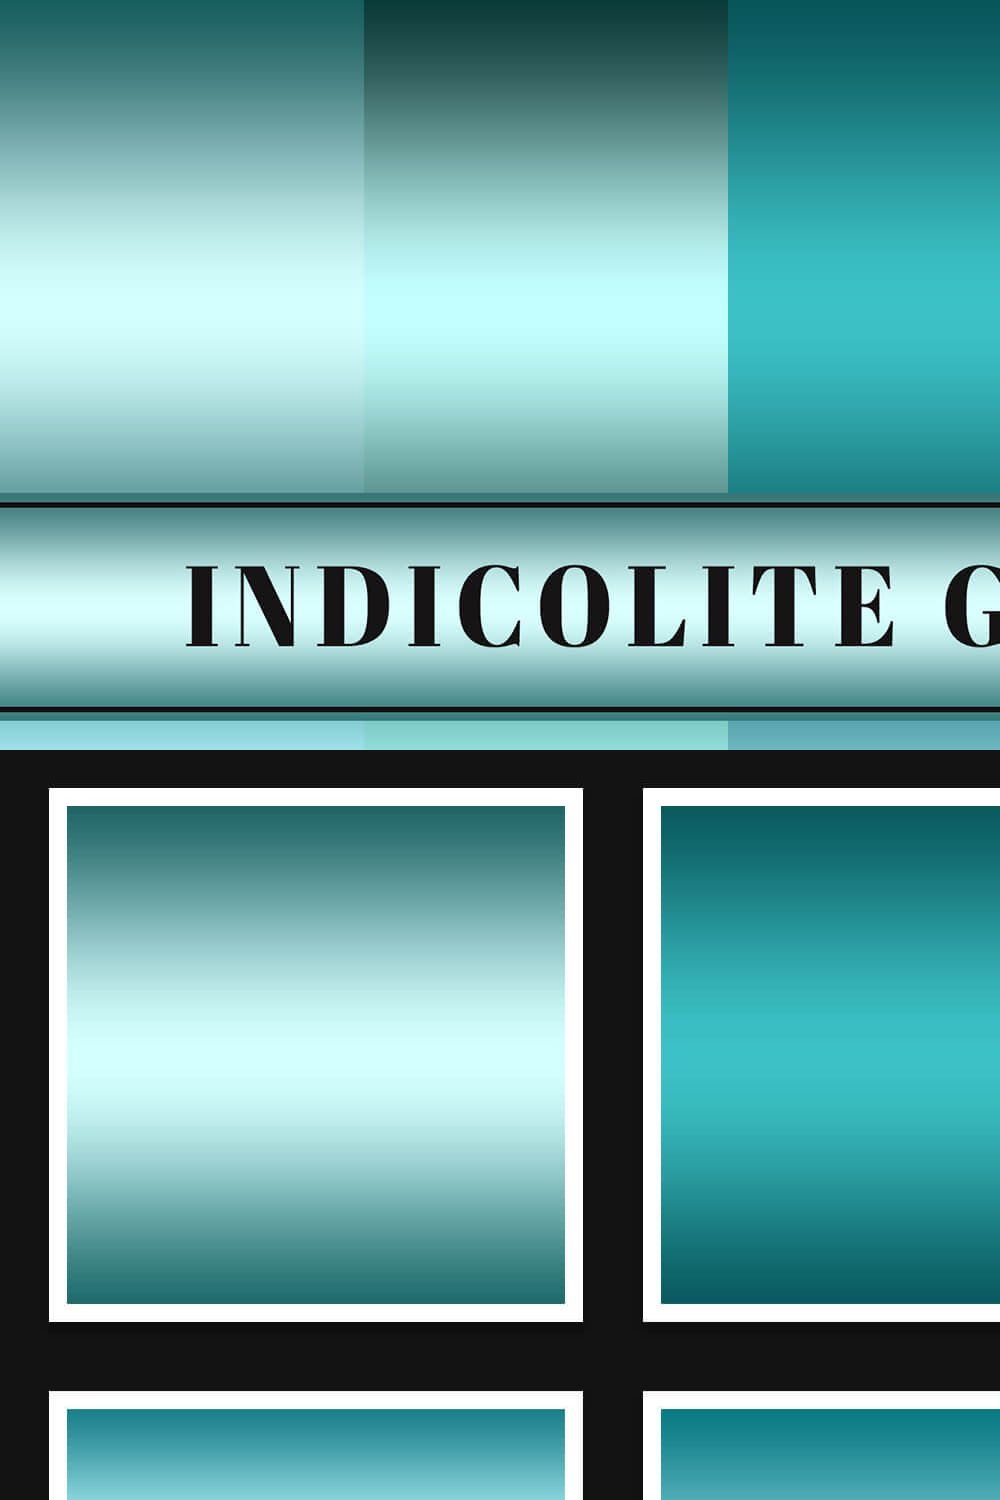 Indicolite Gradients pinterest preview image.